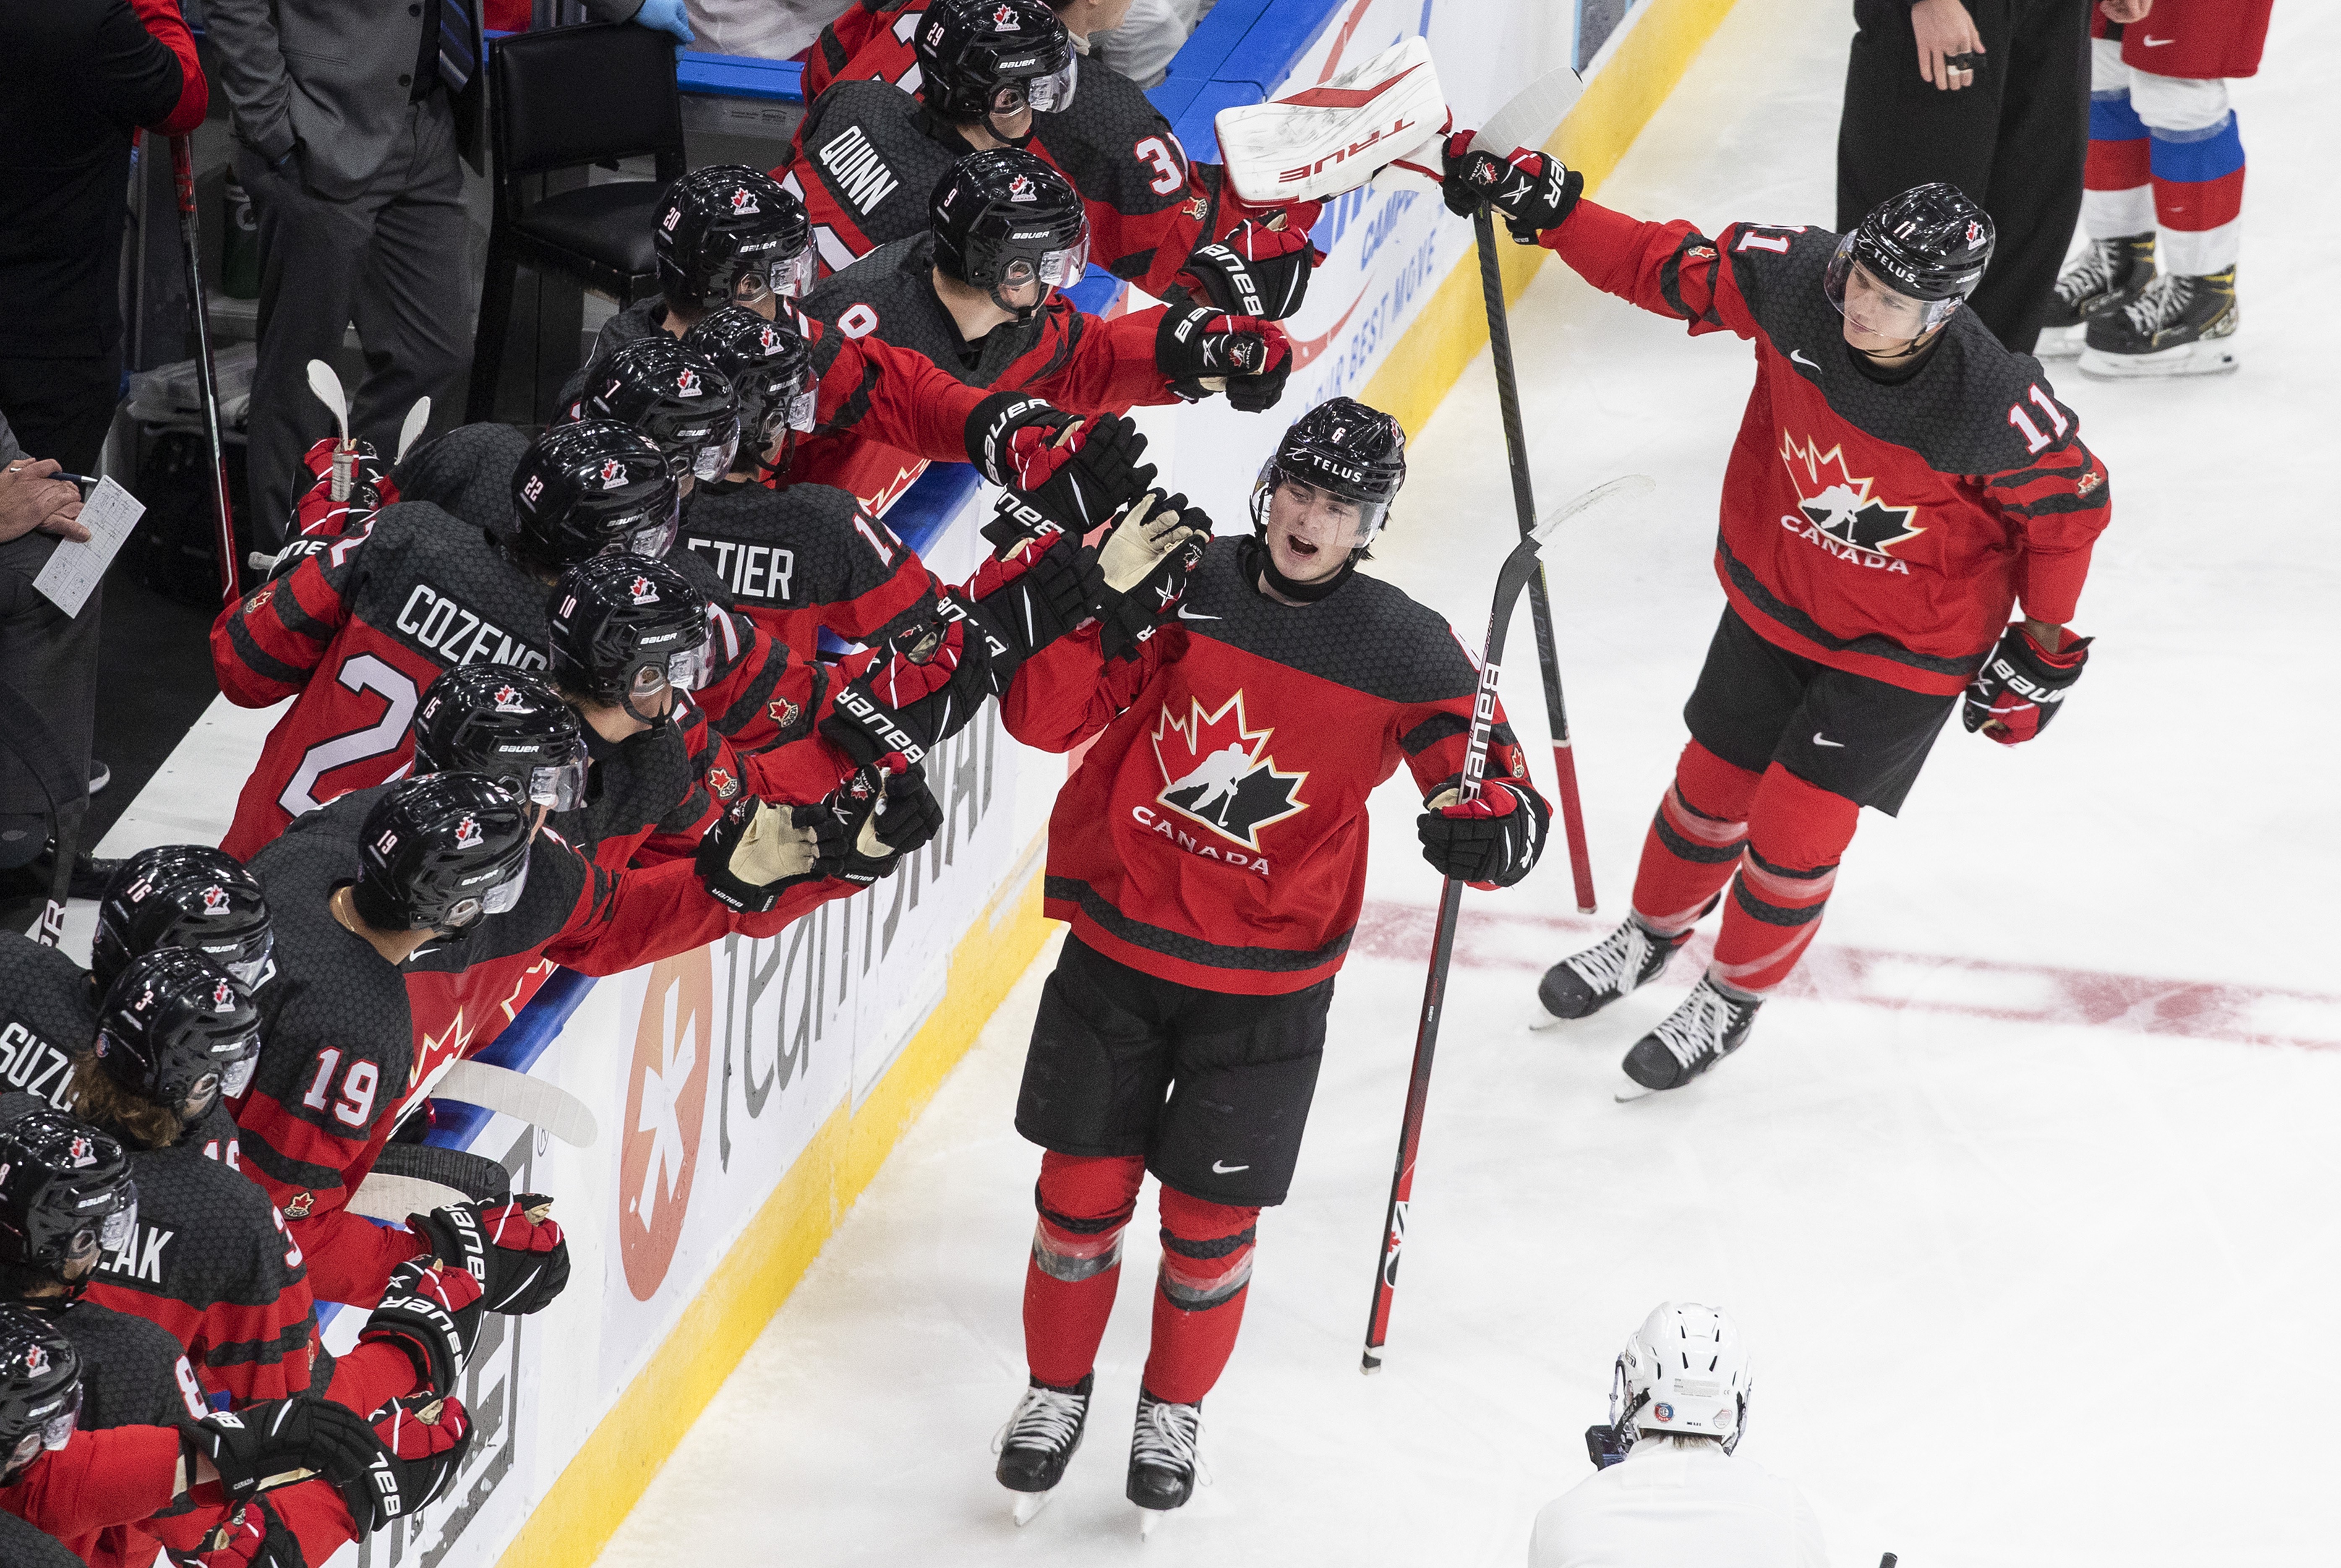 Team Canada wins 2023 World Juniors